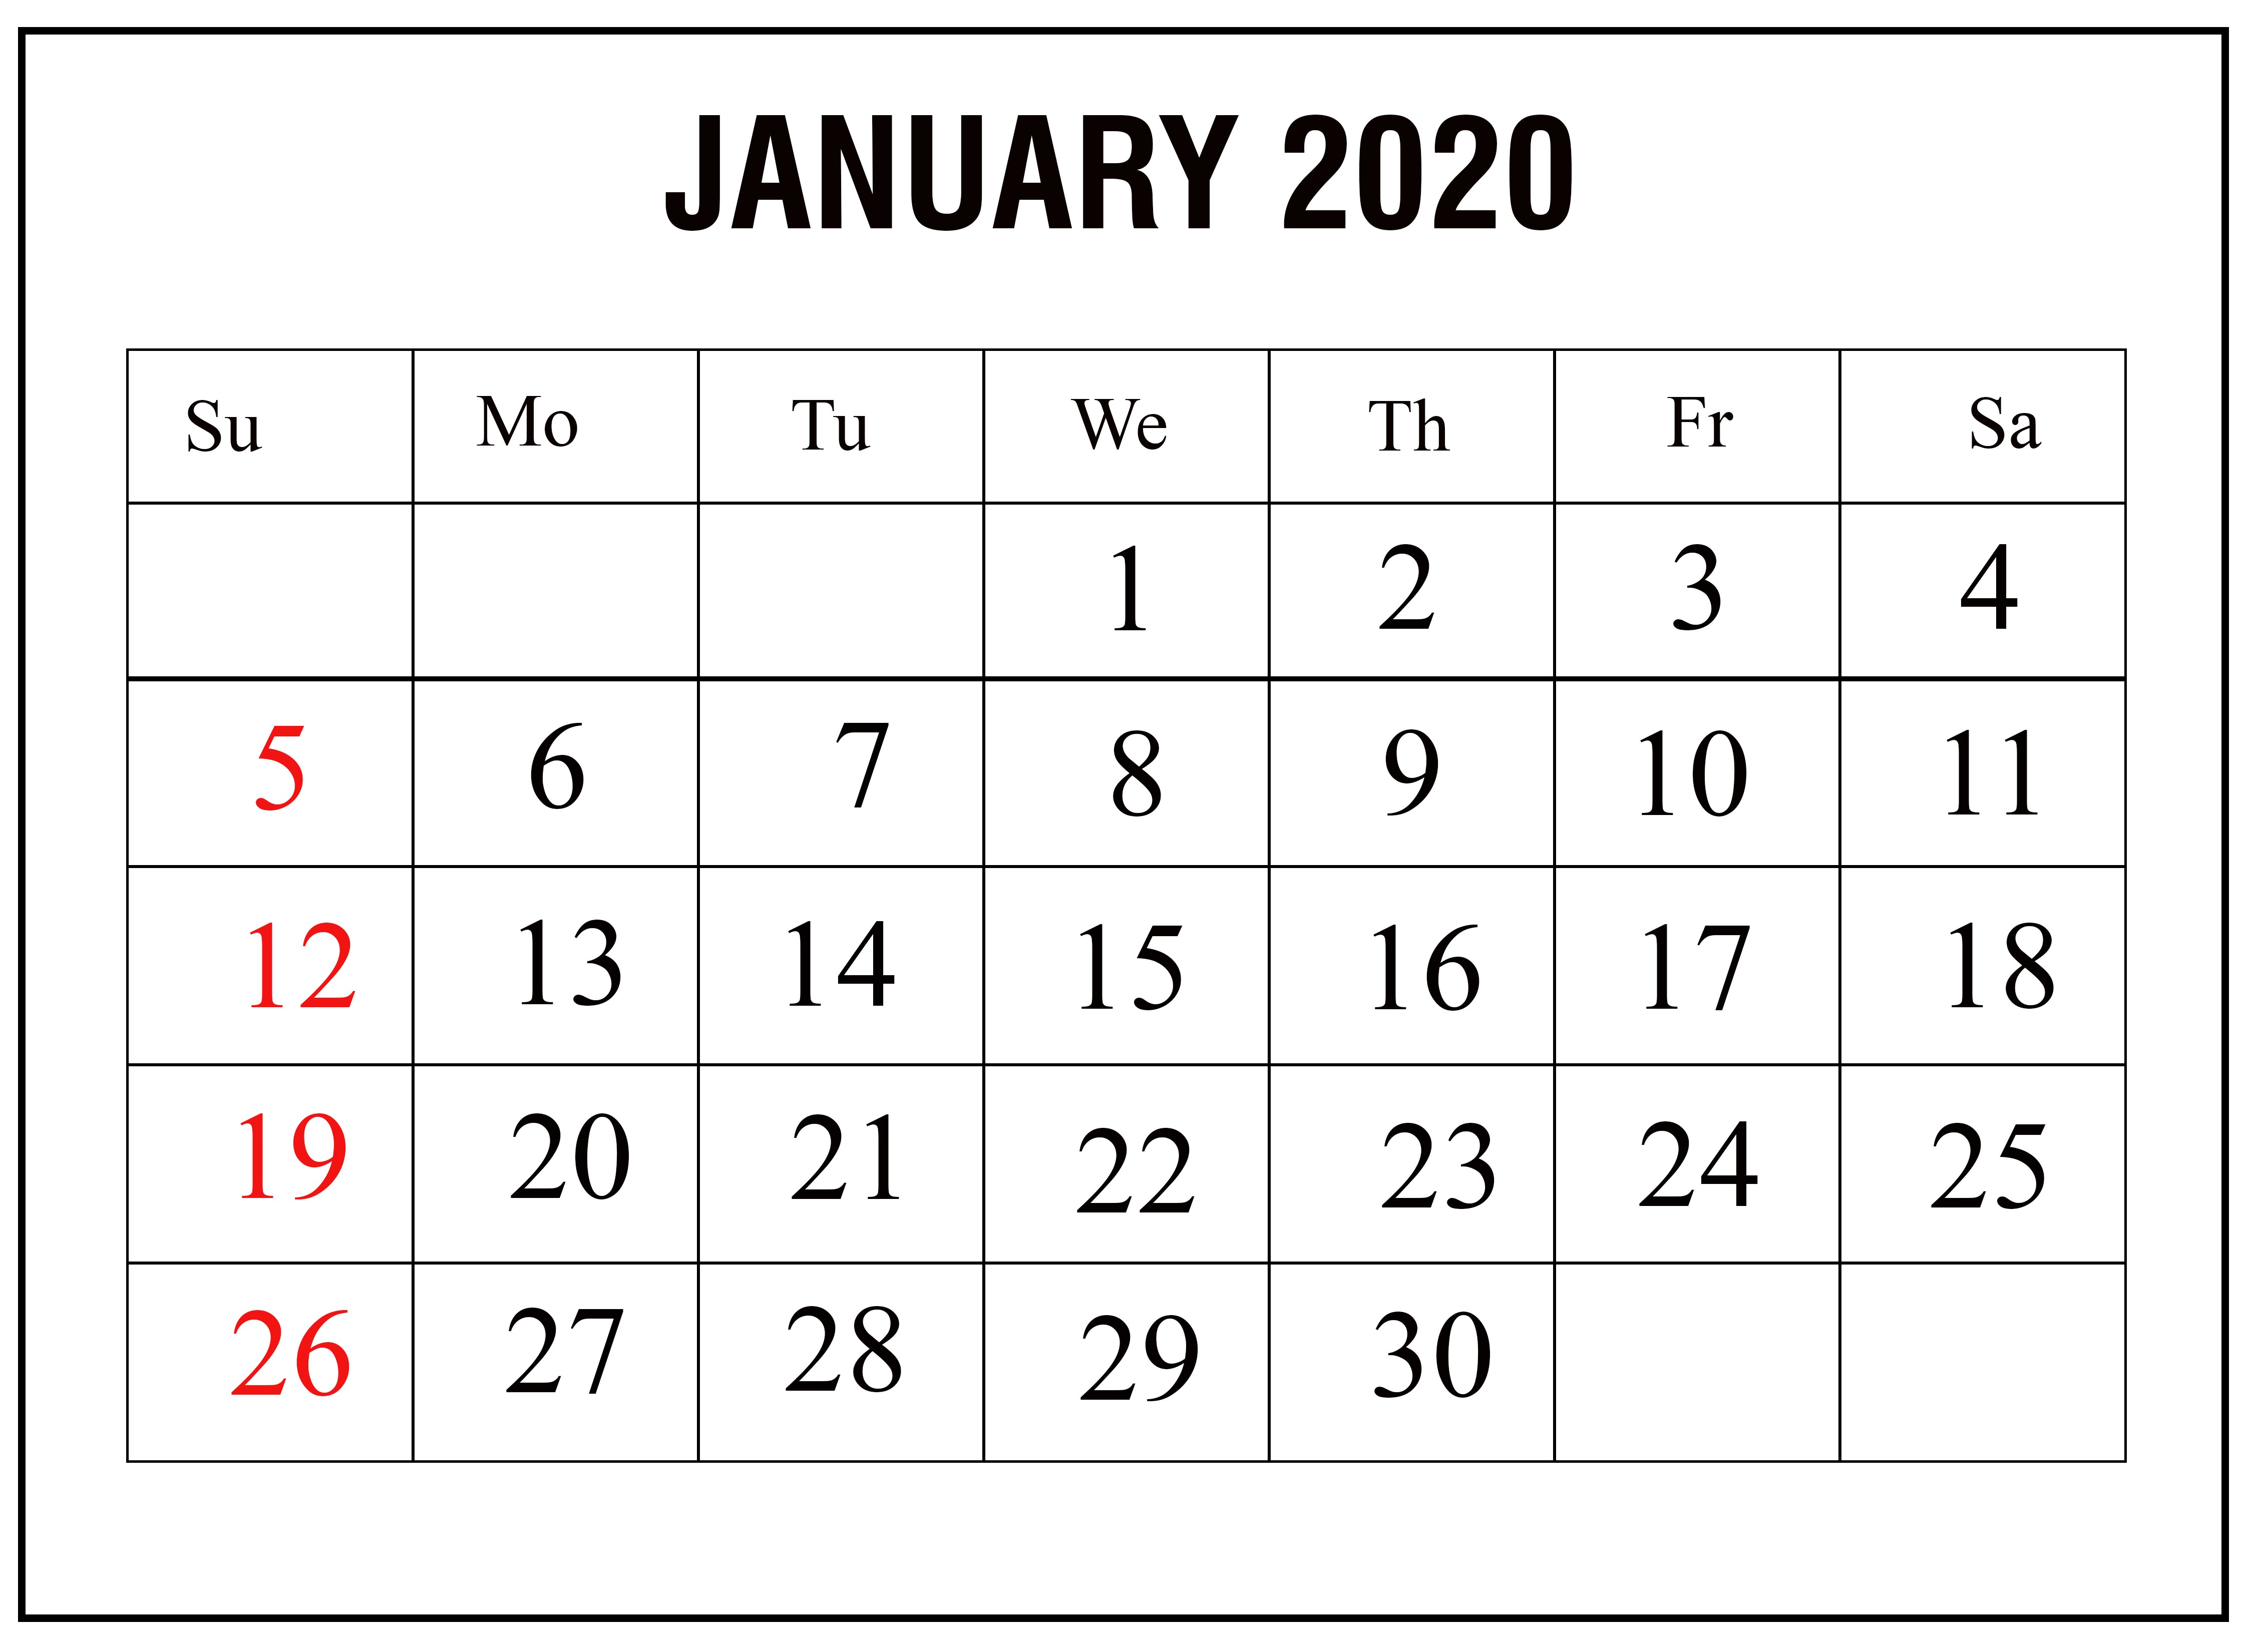 January 2020 Printable Calendar Template